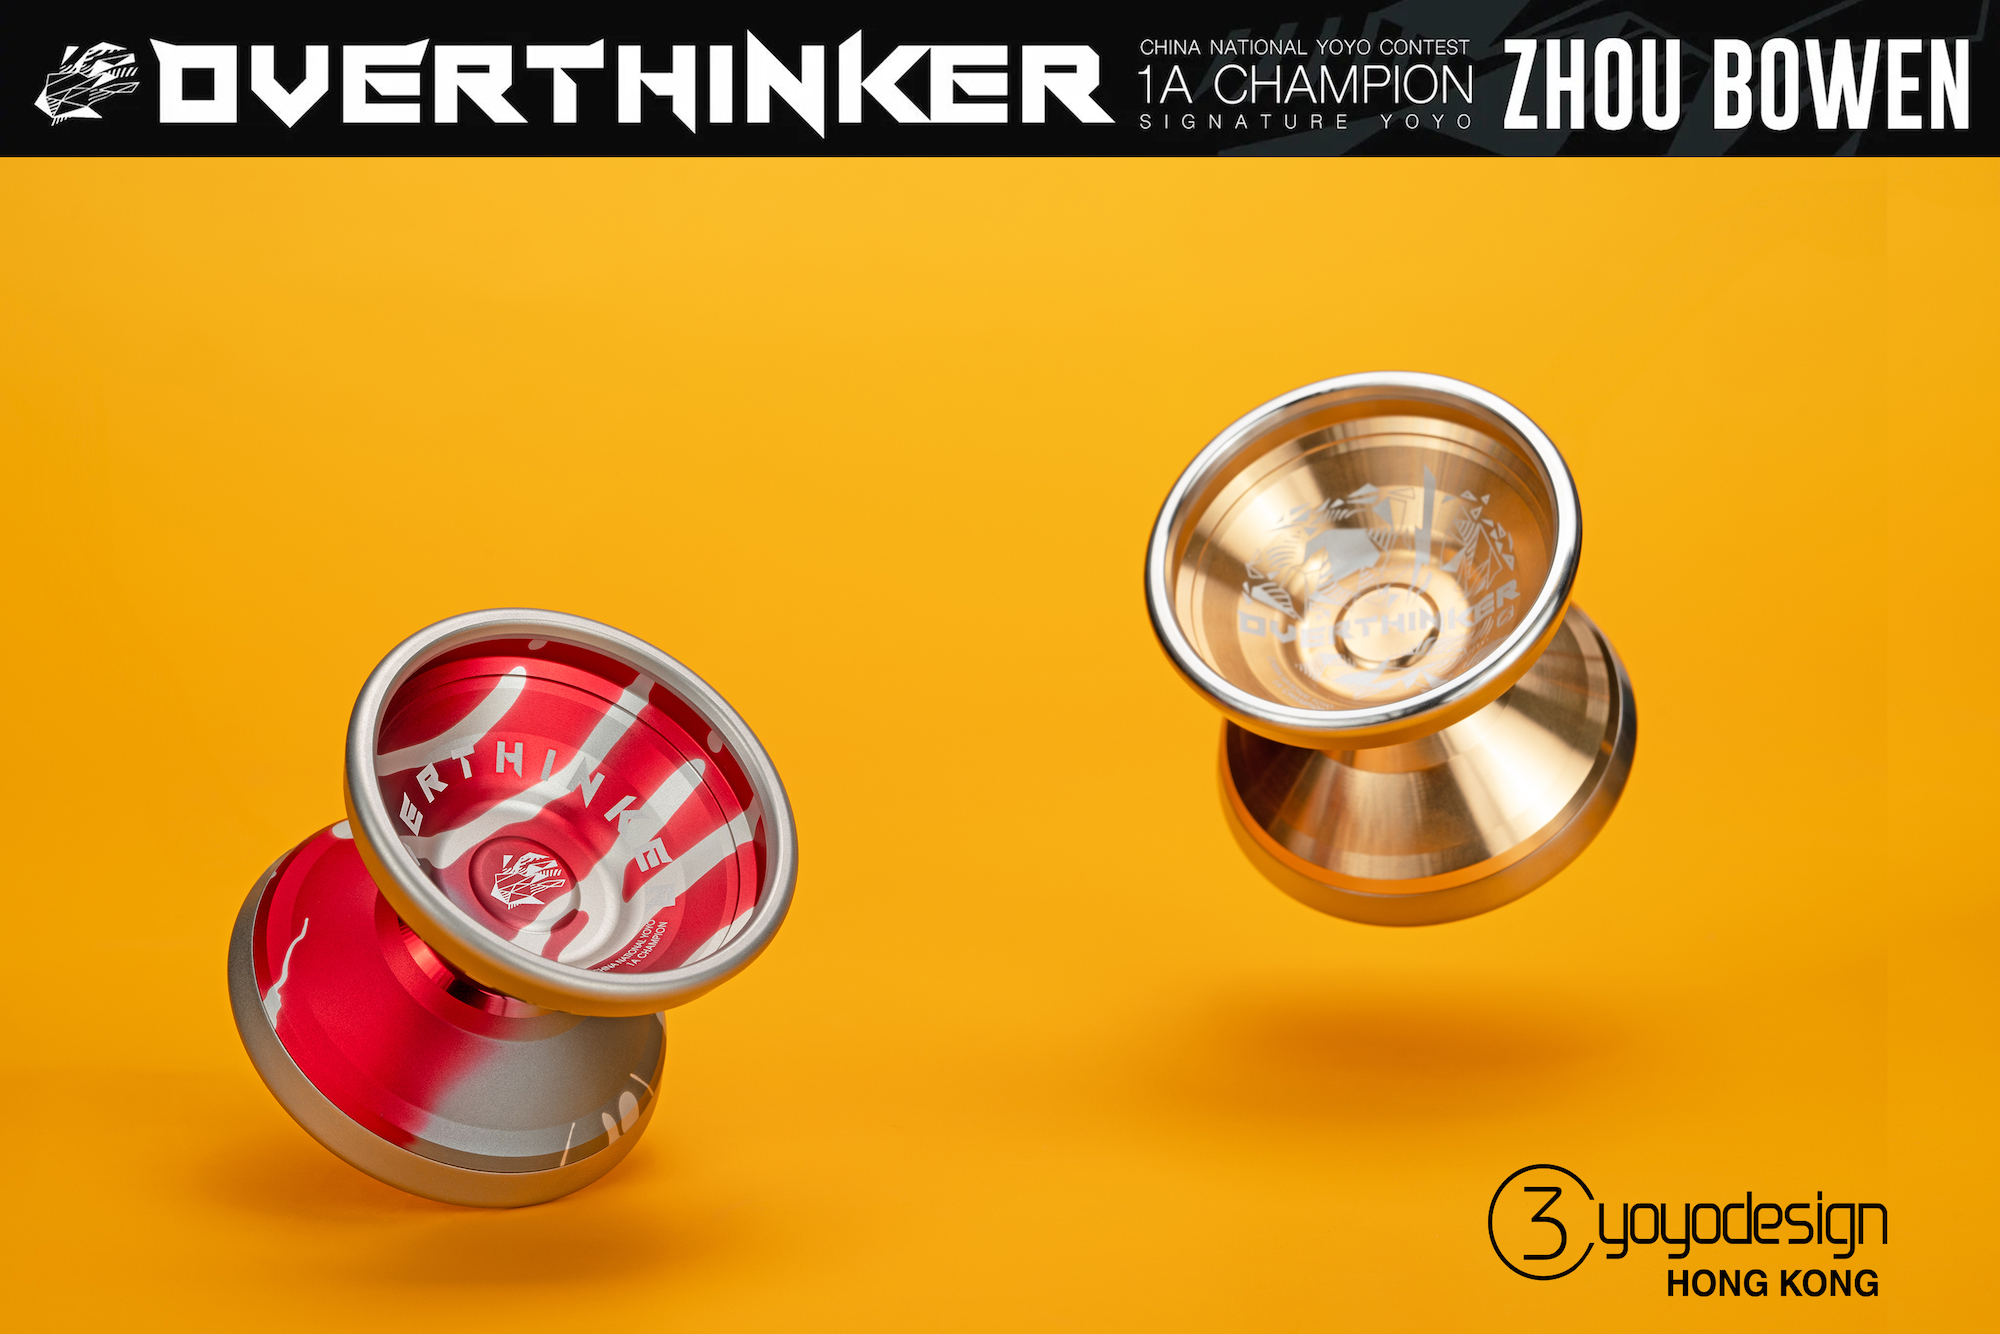 Overthinker by C3yoyodesign